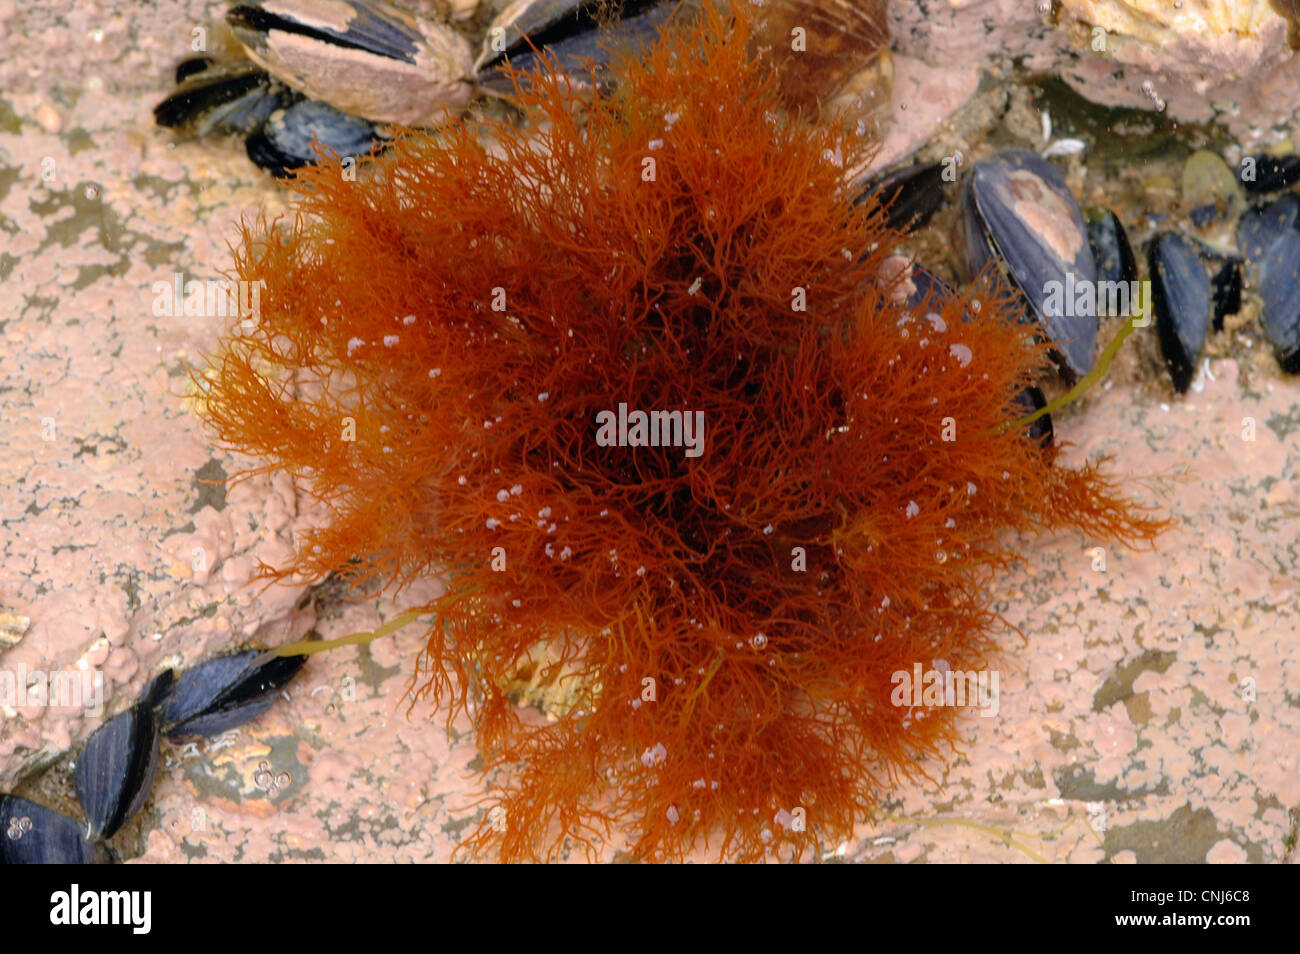 A red seaweed (Polysiphonia fruticulosa) in a rockpool, UK Stock Photo